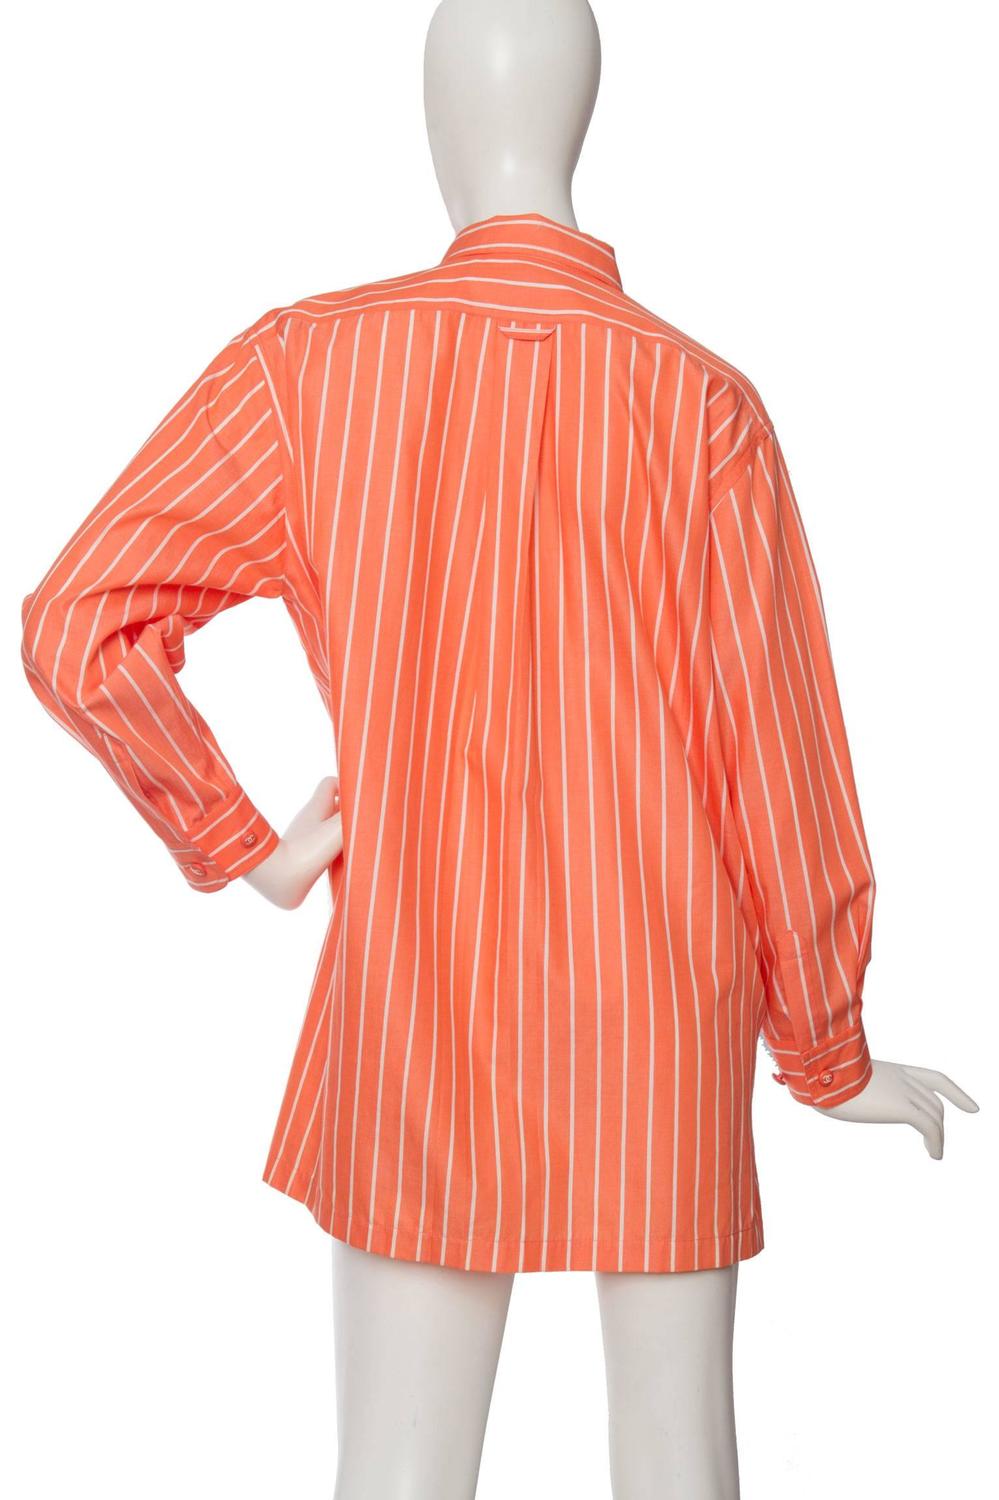 1980s Chanel Striped Cotton Pajamas at 1stdibs